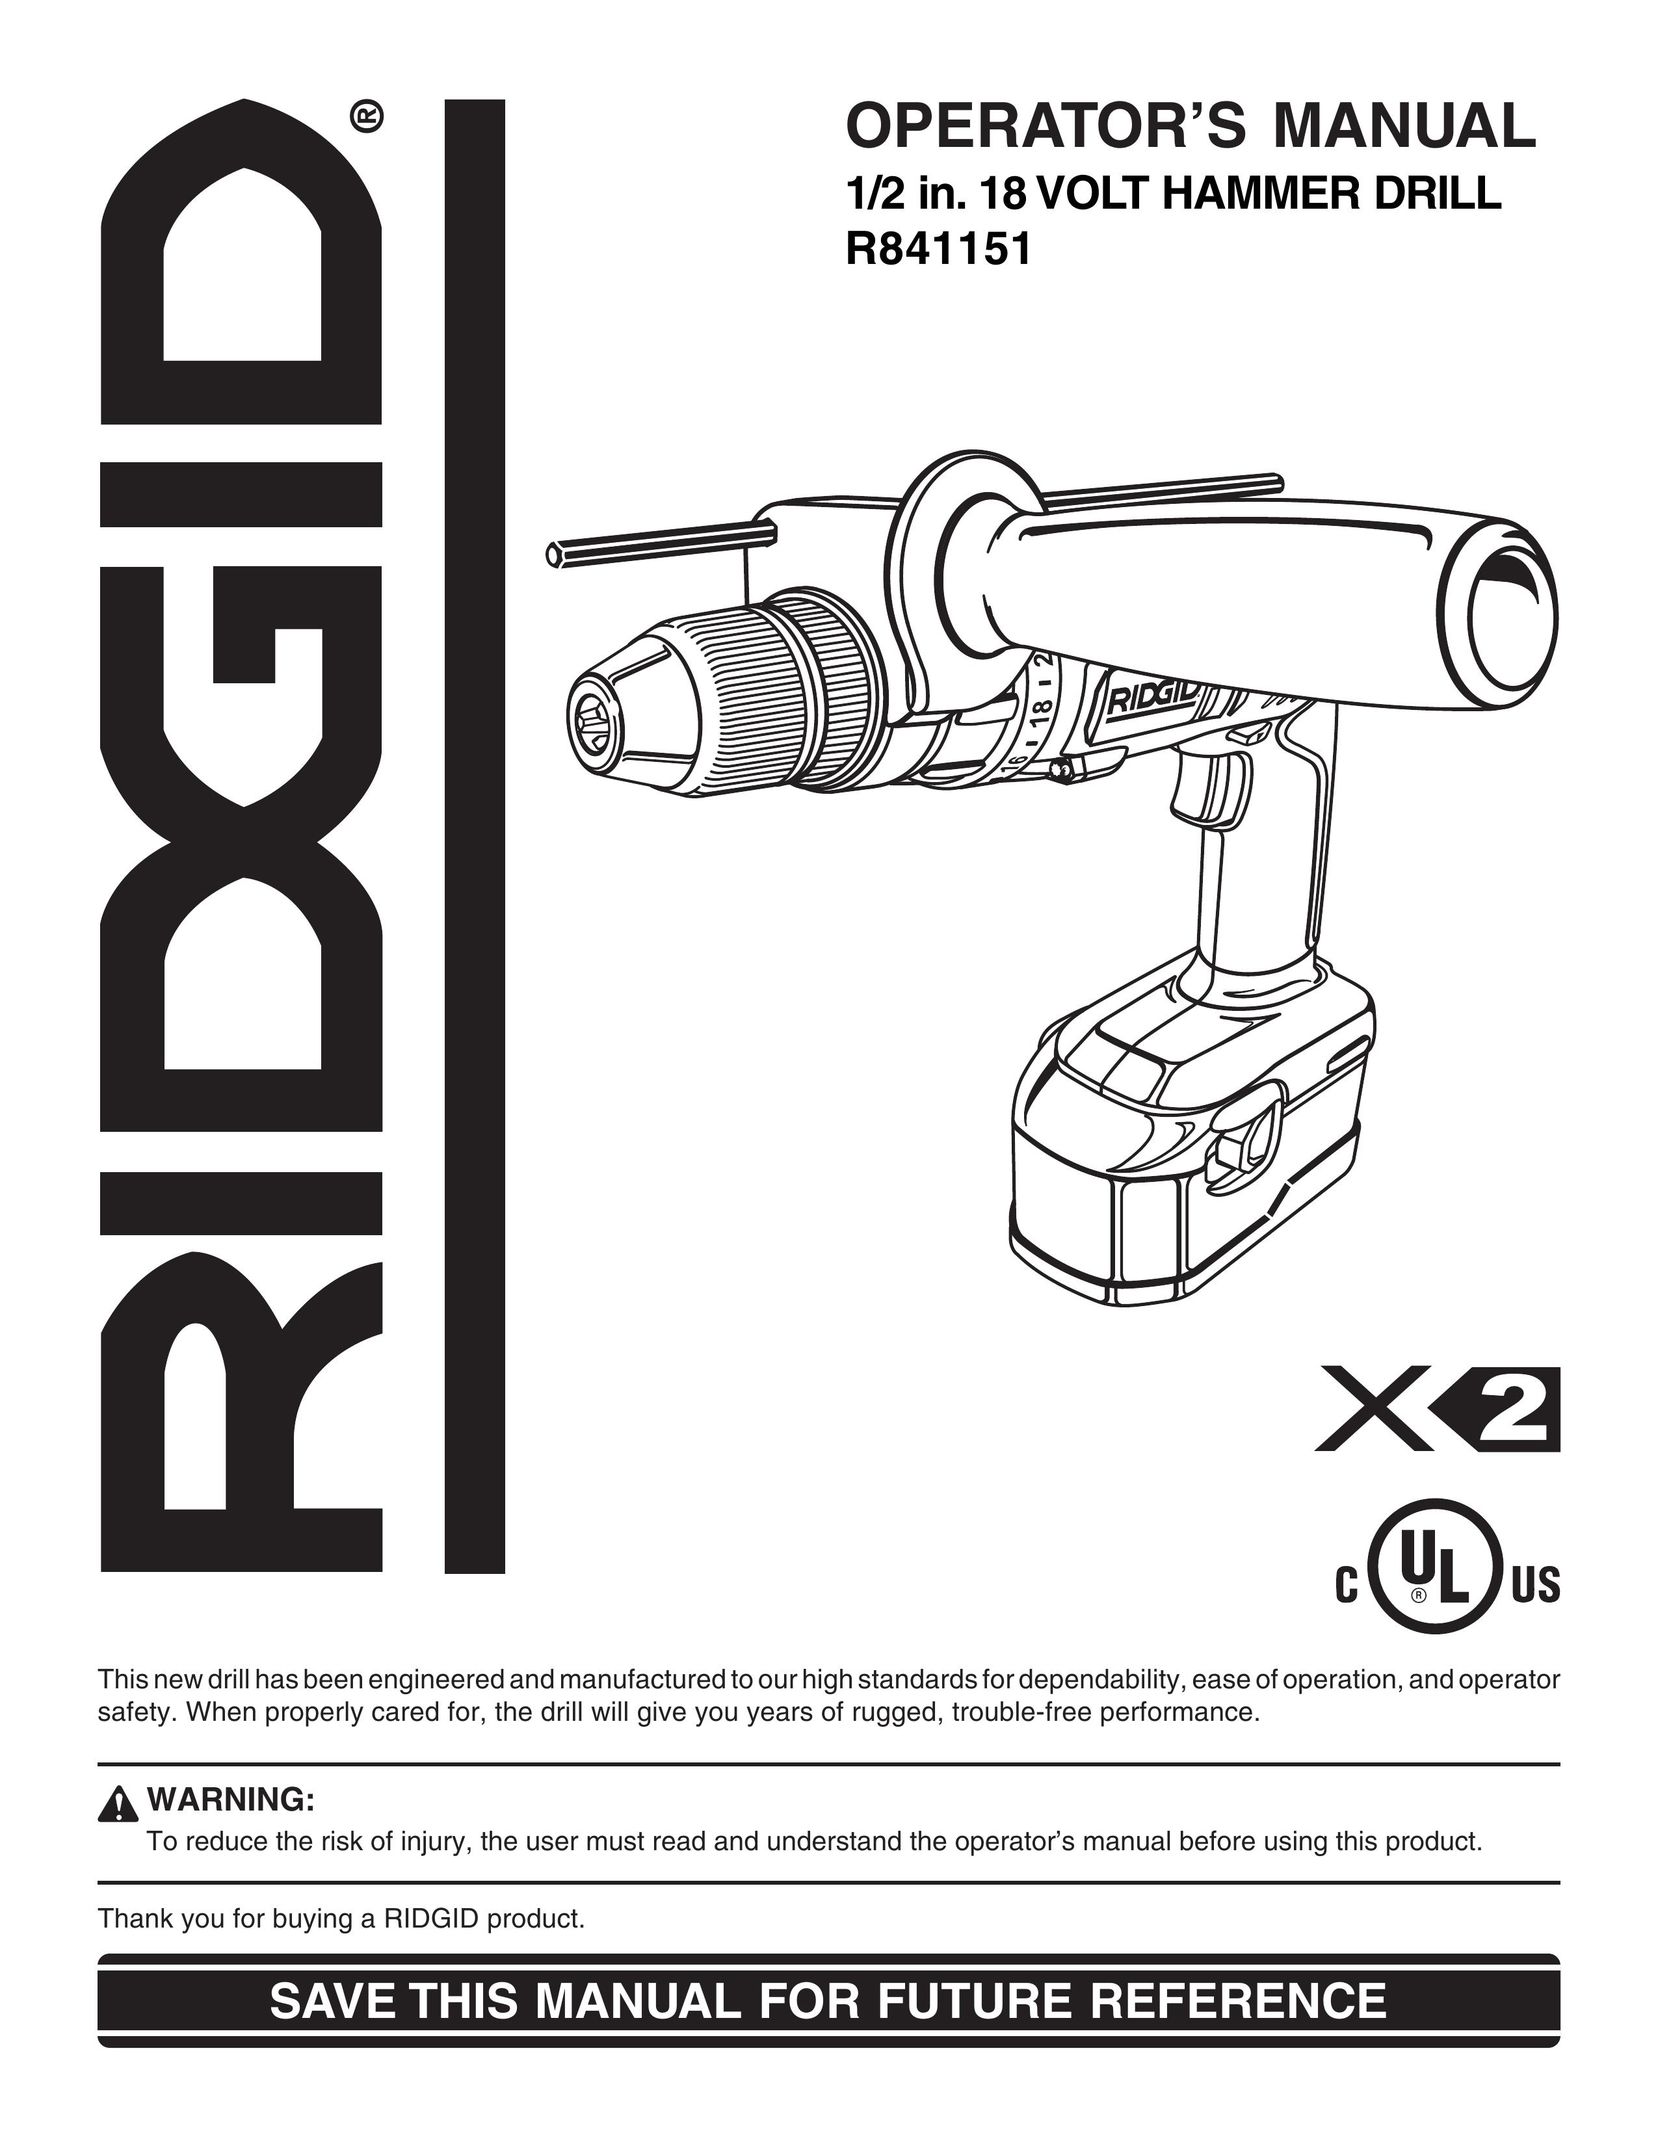 RIDGID R841151 Drill User Manual